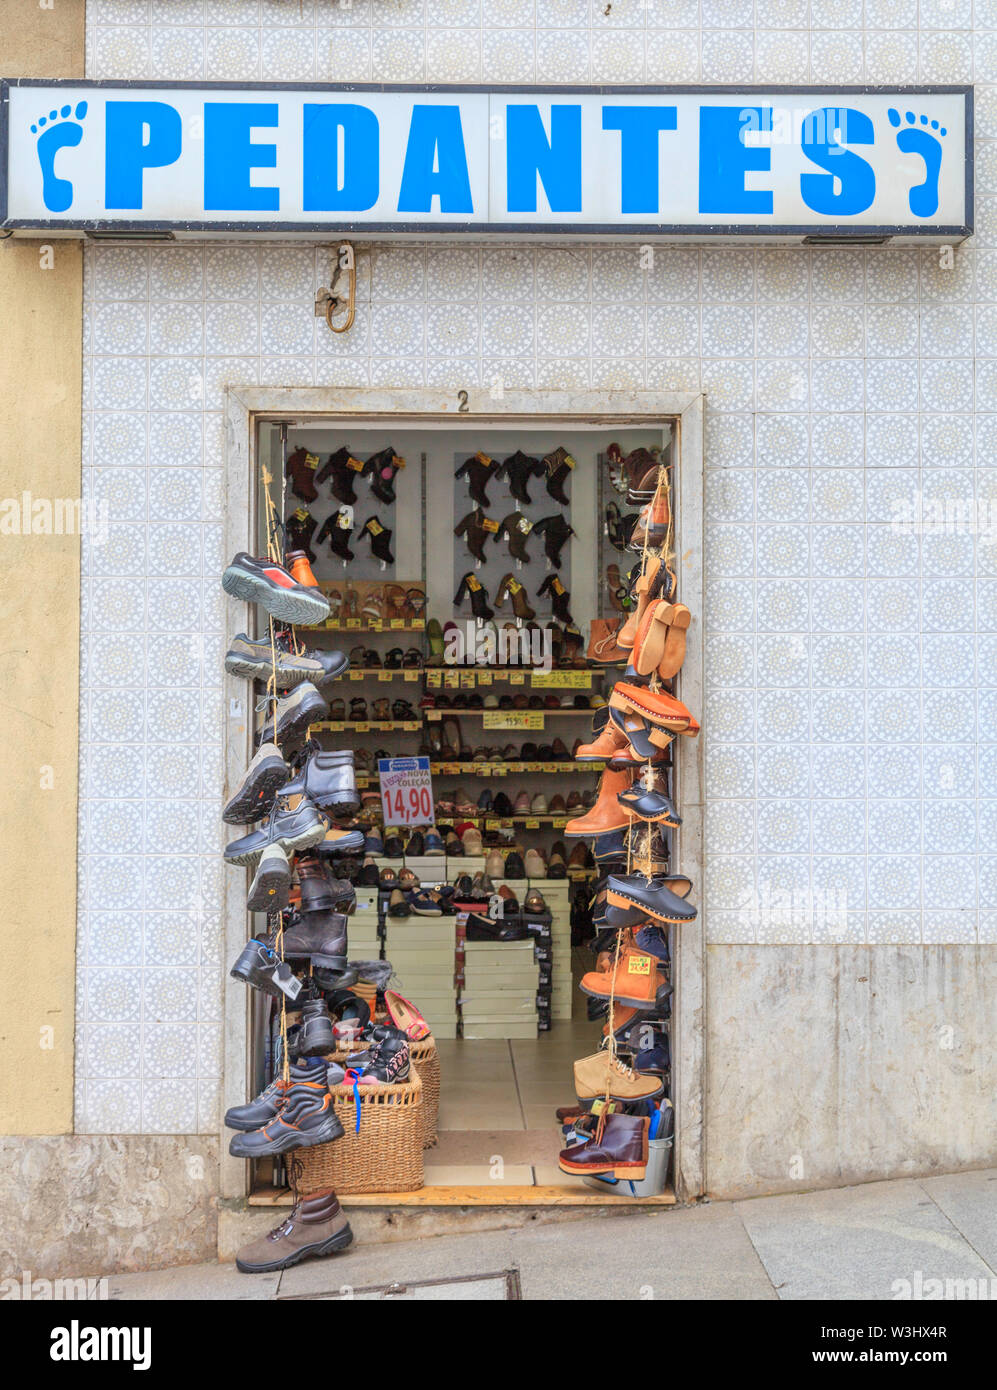 Dream's Cabeleireiro – Shop in Porto